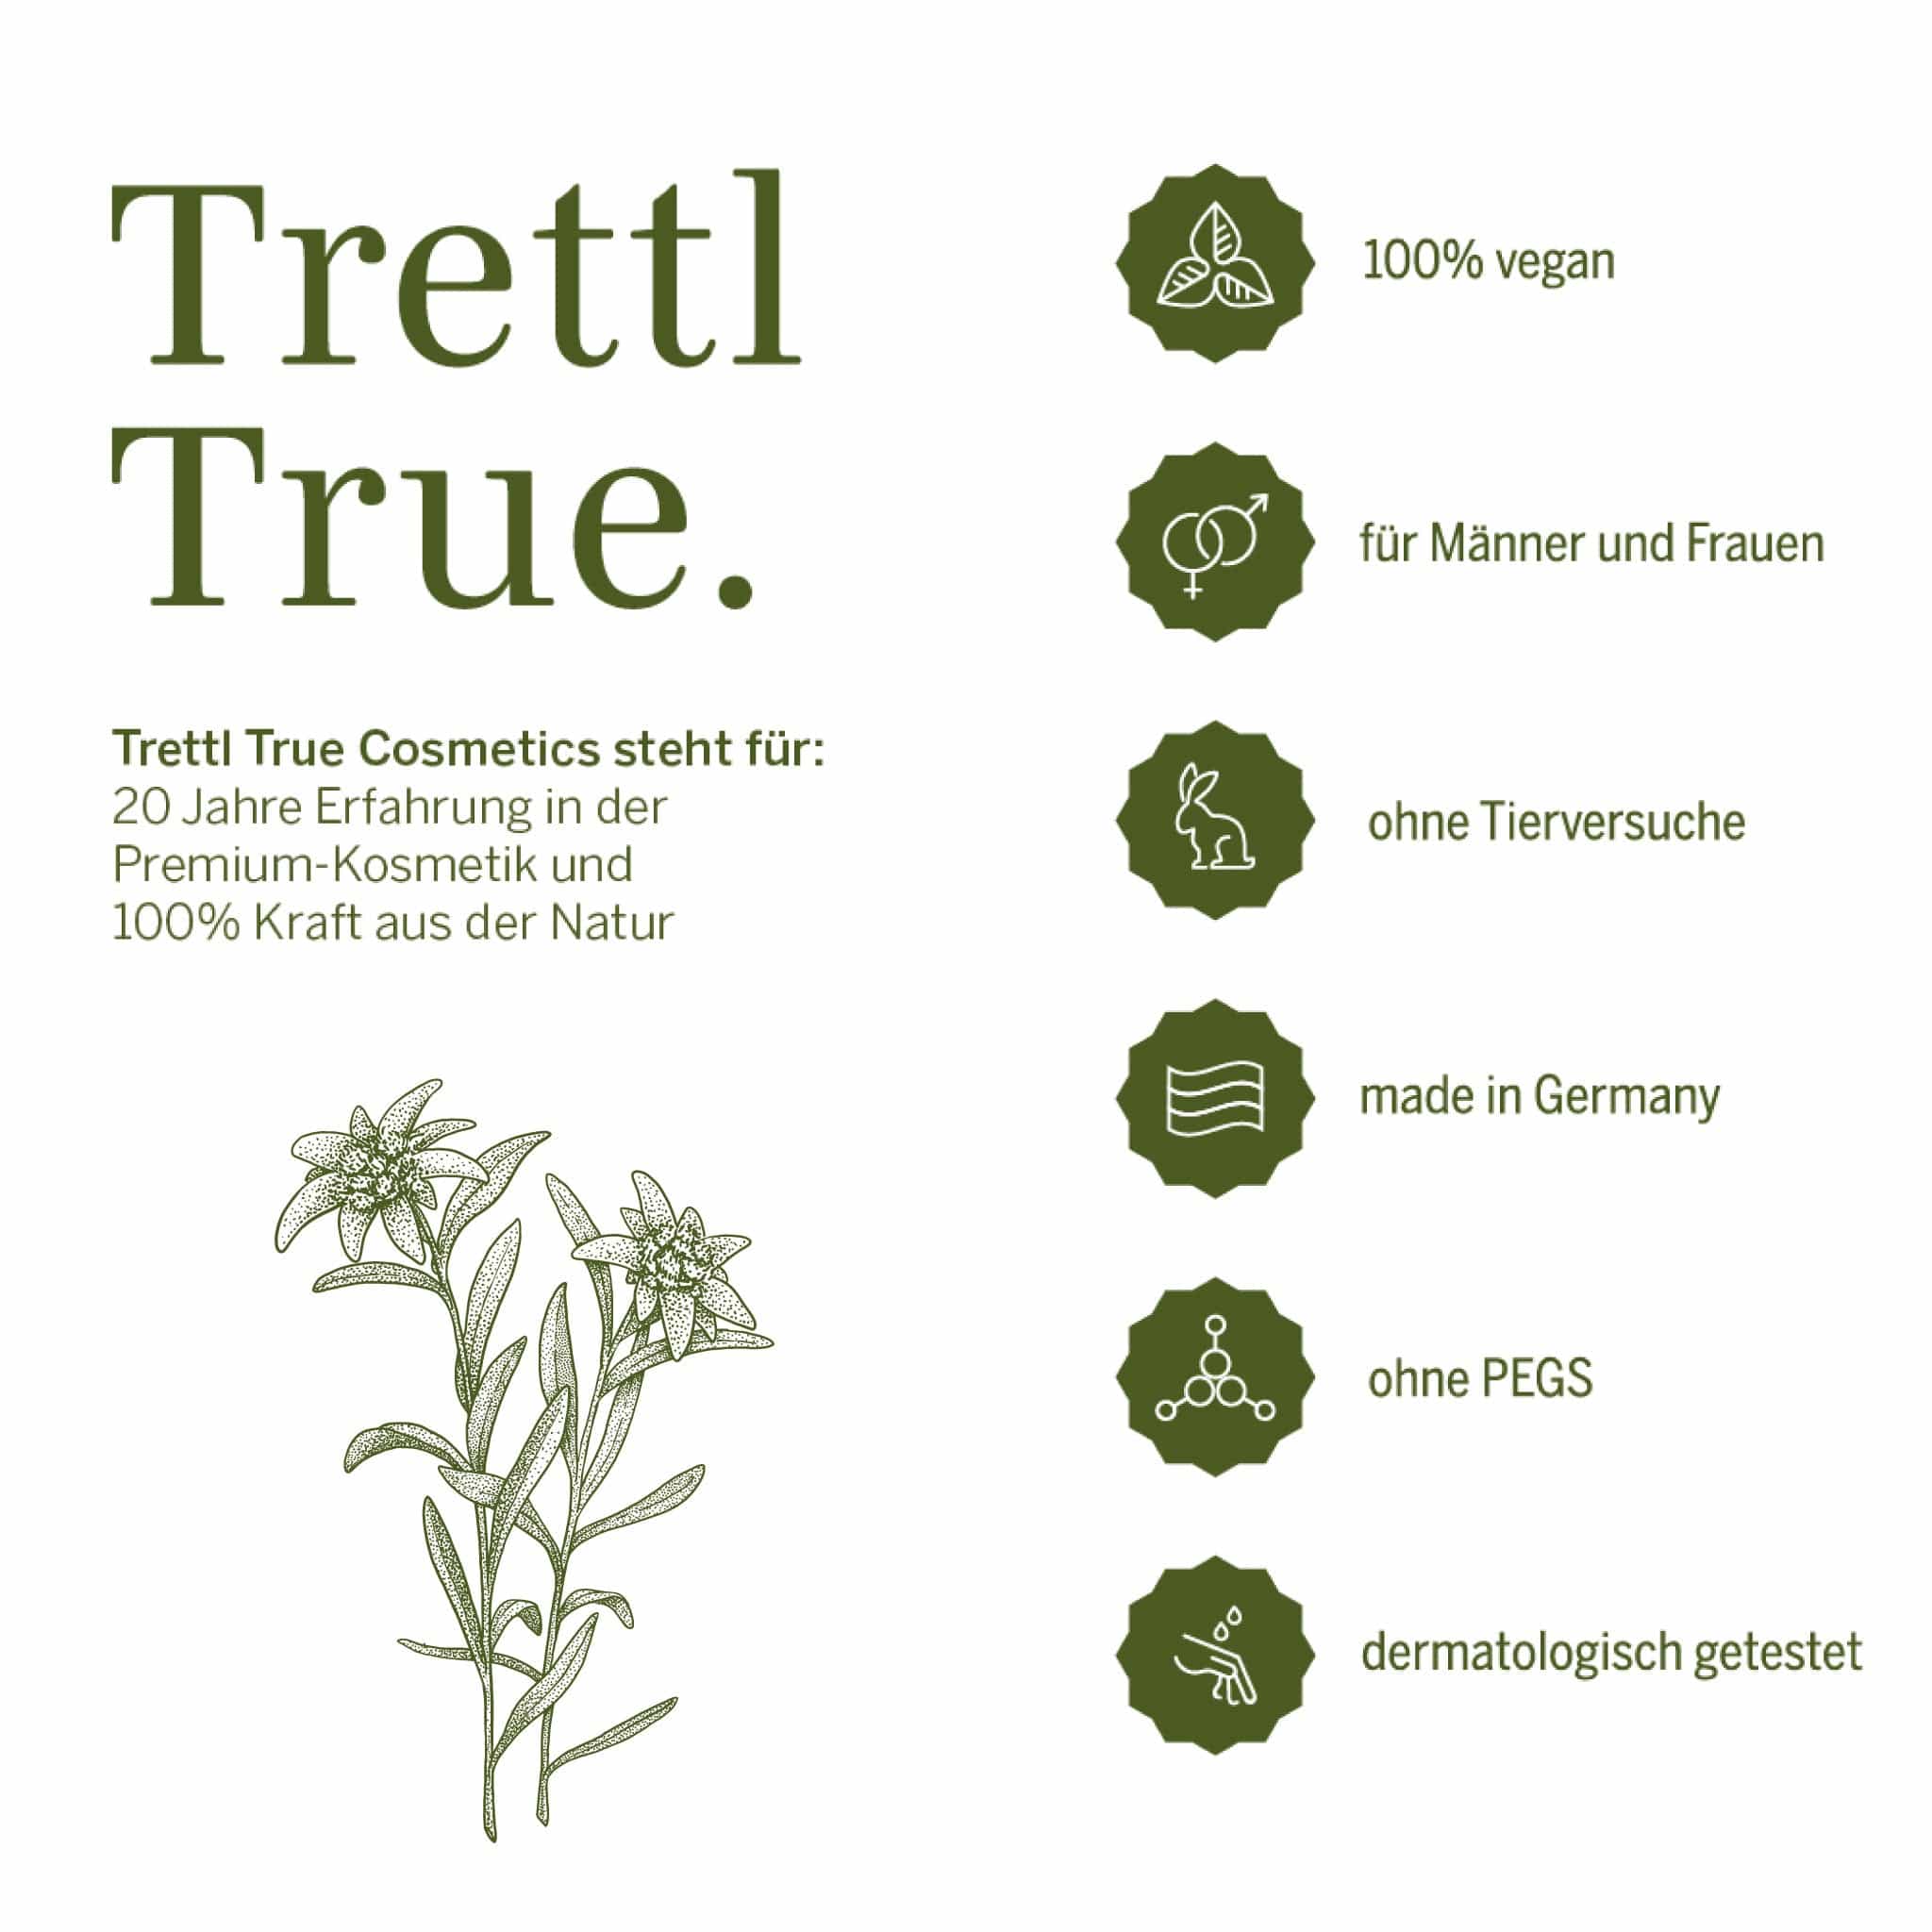 Trettl-True Cosmetics Set bei Rosacea und Couperose